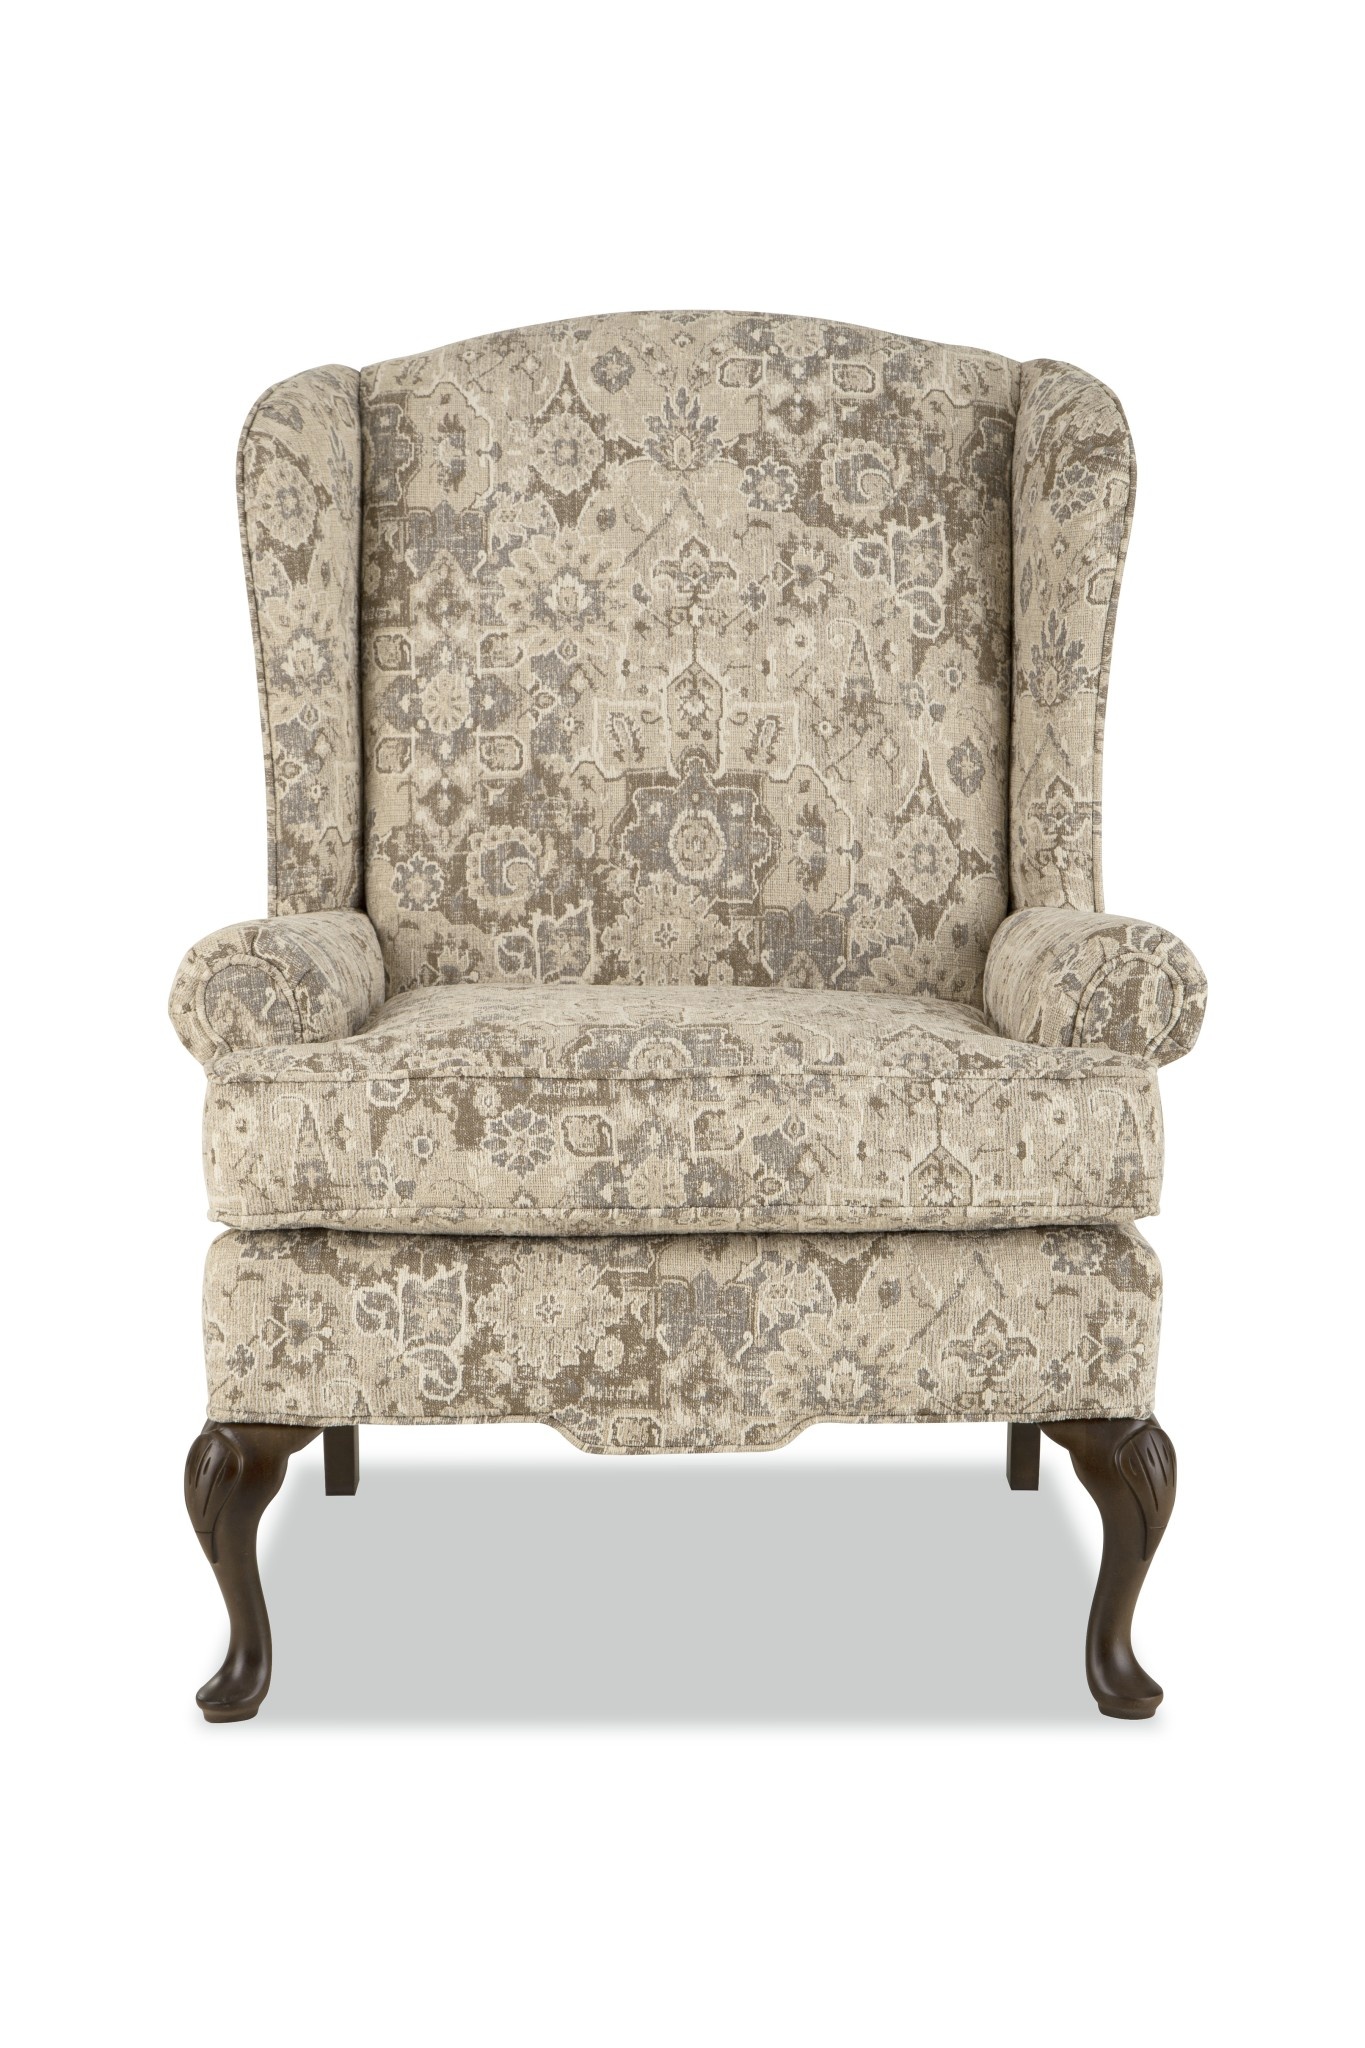 Craftmaster Furniture 017510 Chair